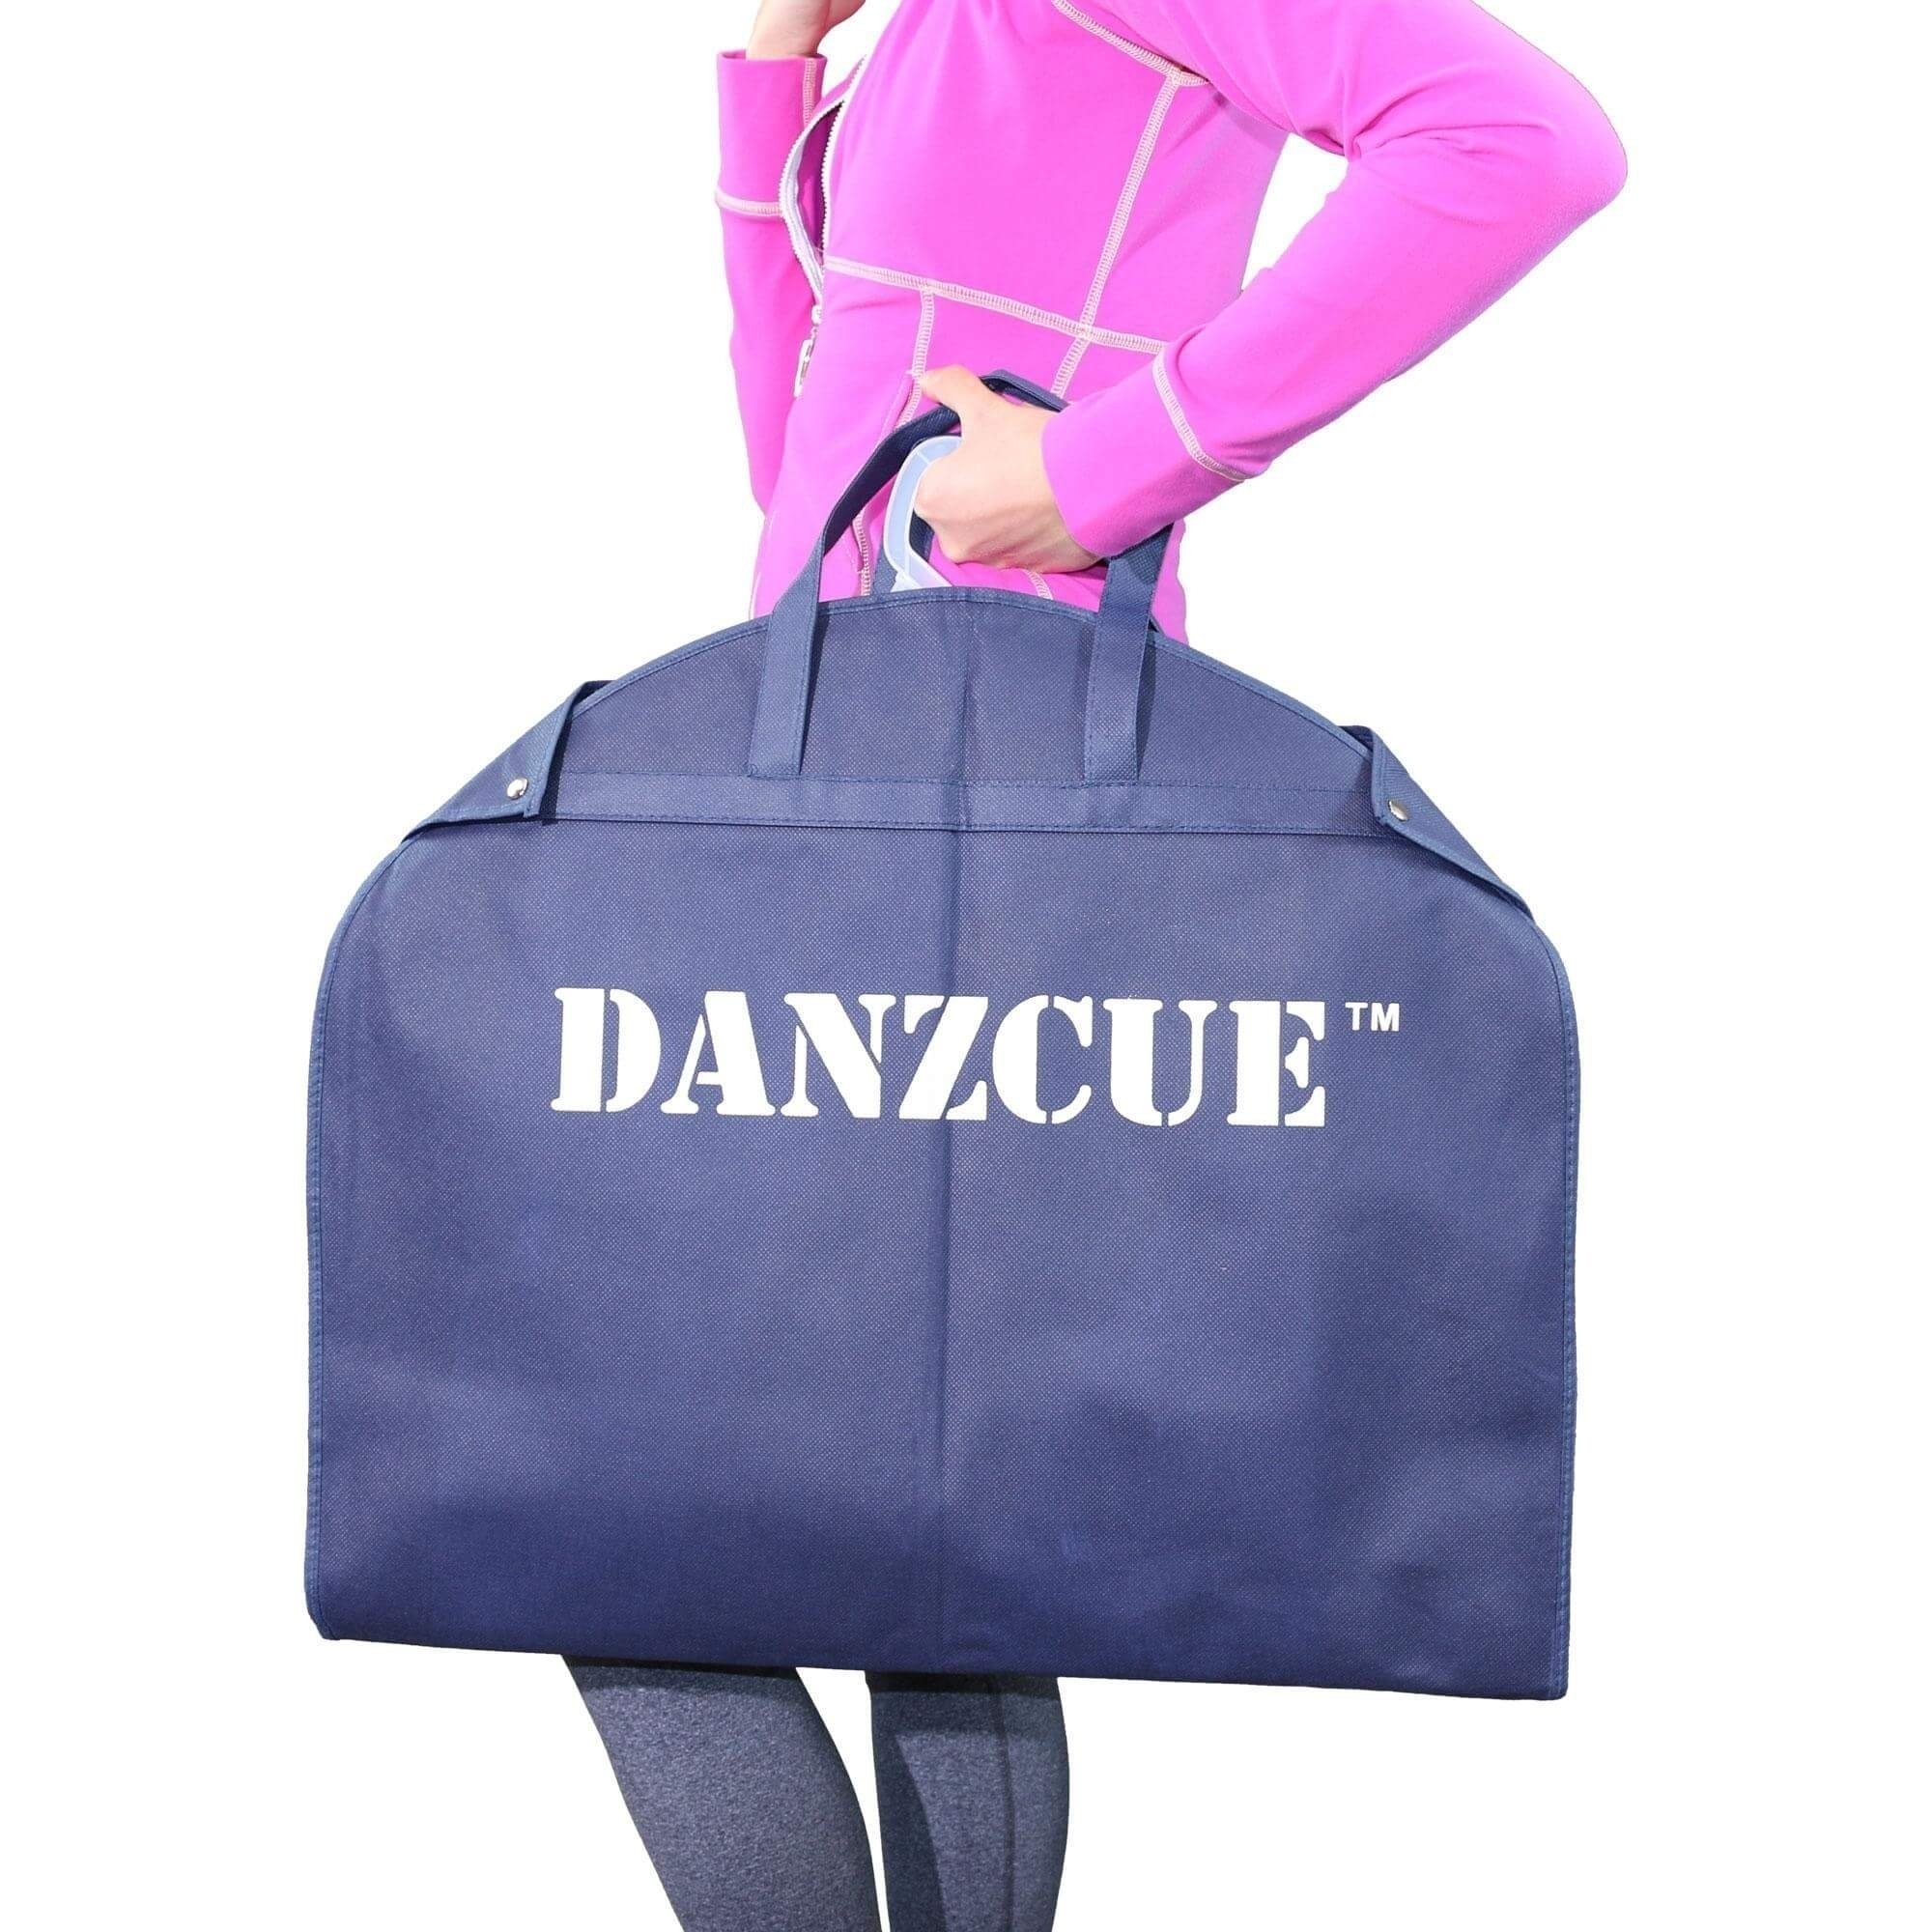 Danzcue "DANZCUE" Garment Bag - Click Image to Close